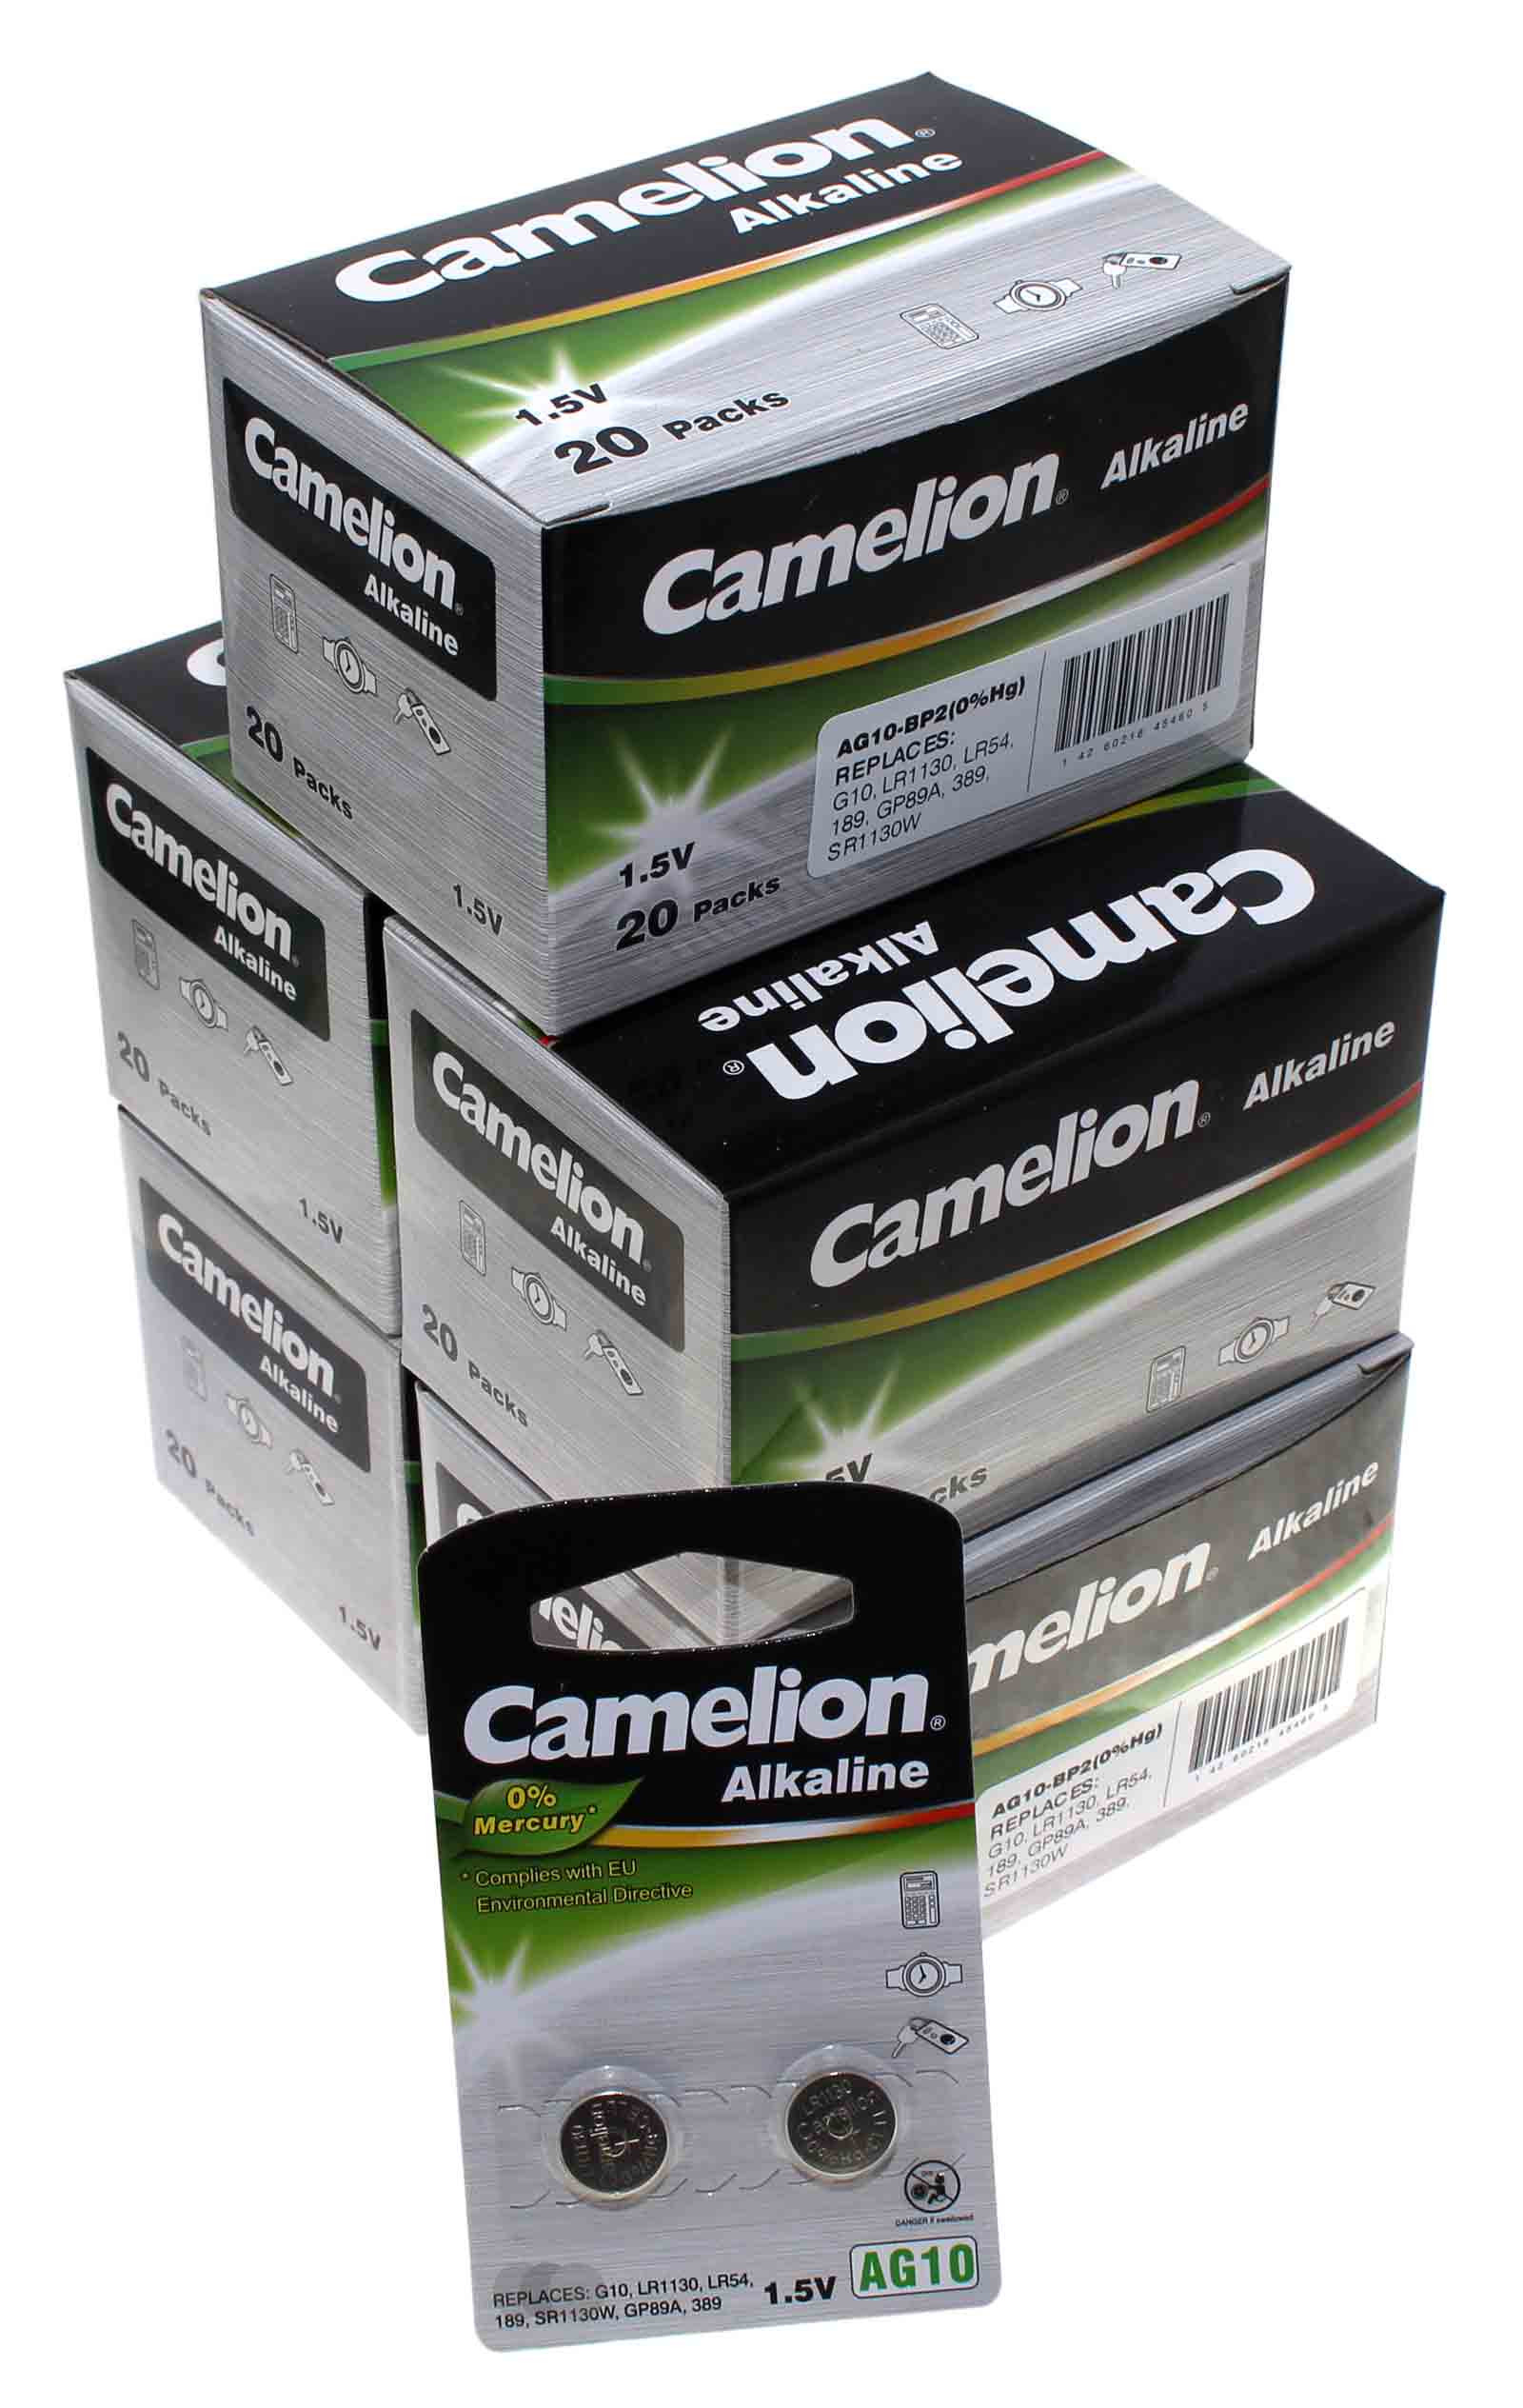 200x [100x2er Pack] Camelion AG10 Alkaline 1,5V Knopfzelle Batterie, G10, LR1130, LR54, 189, SR1130W, GP89A, 389, 80mAh